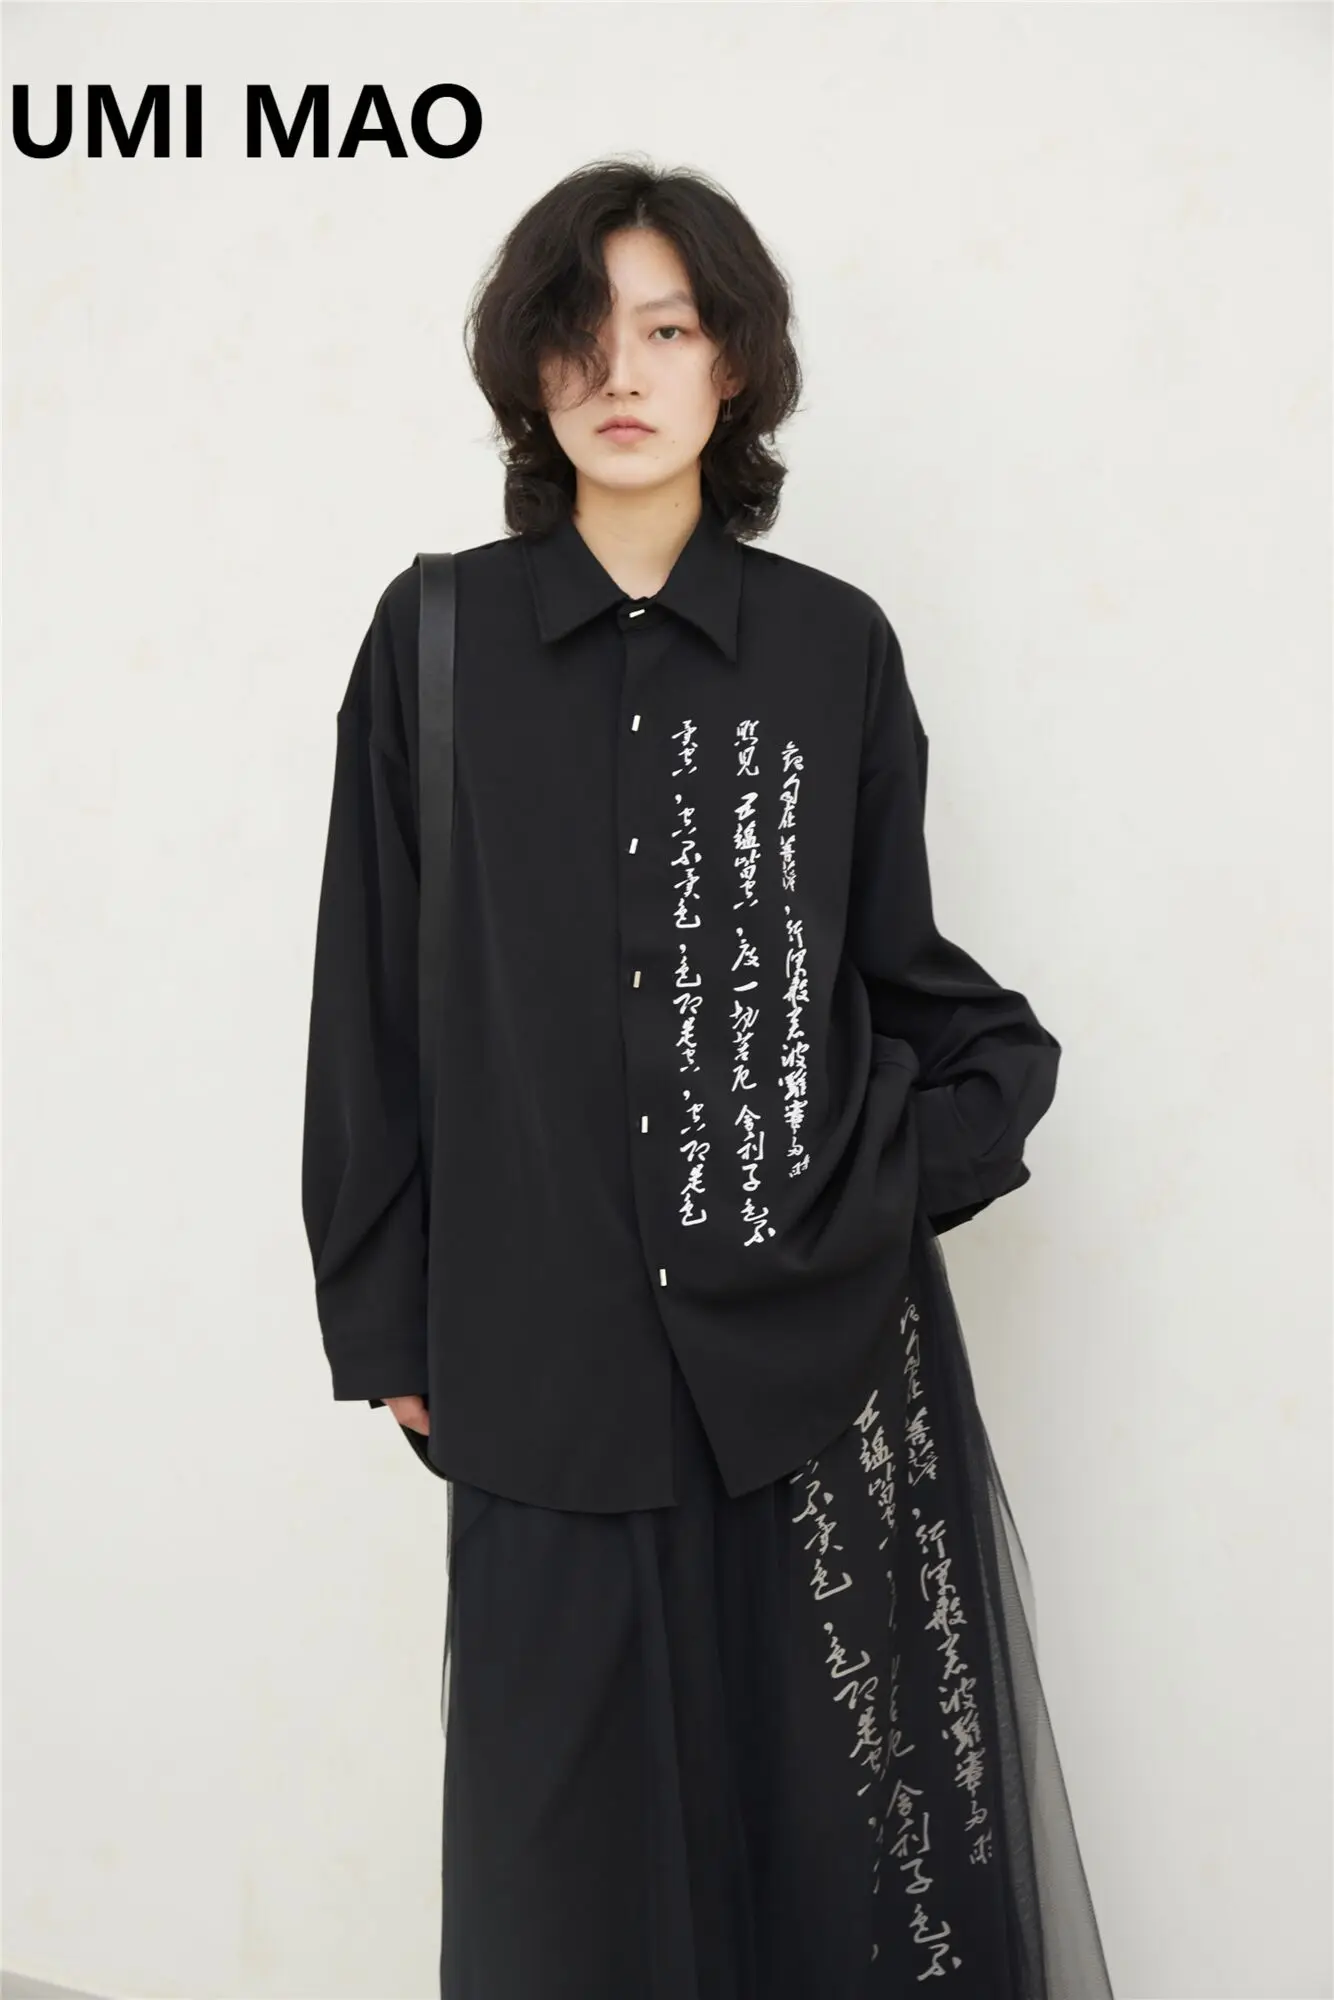 UMI MAO Yamamoto Dark Crowd Design Новая Китайская Рубашка С Каллиграфическим Принтом 